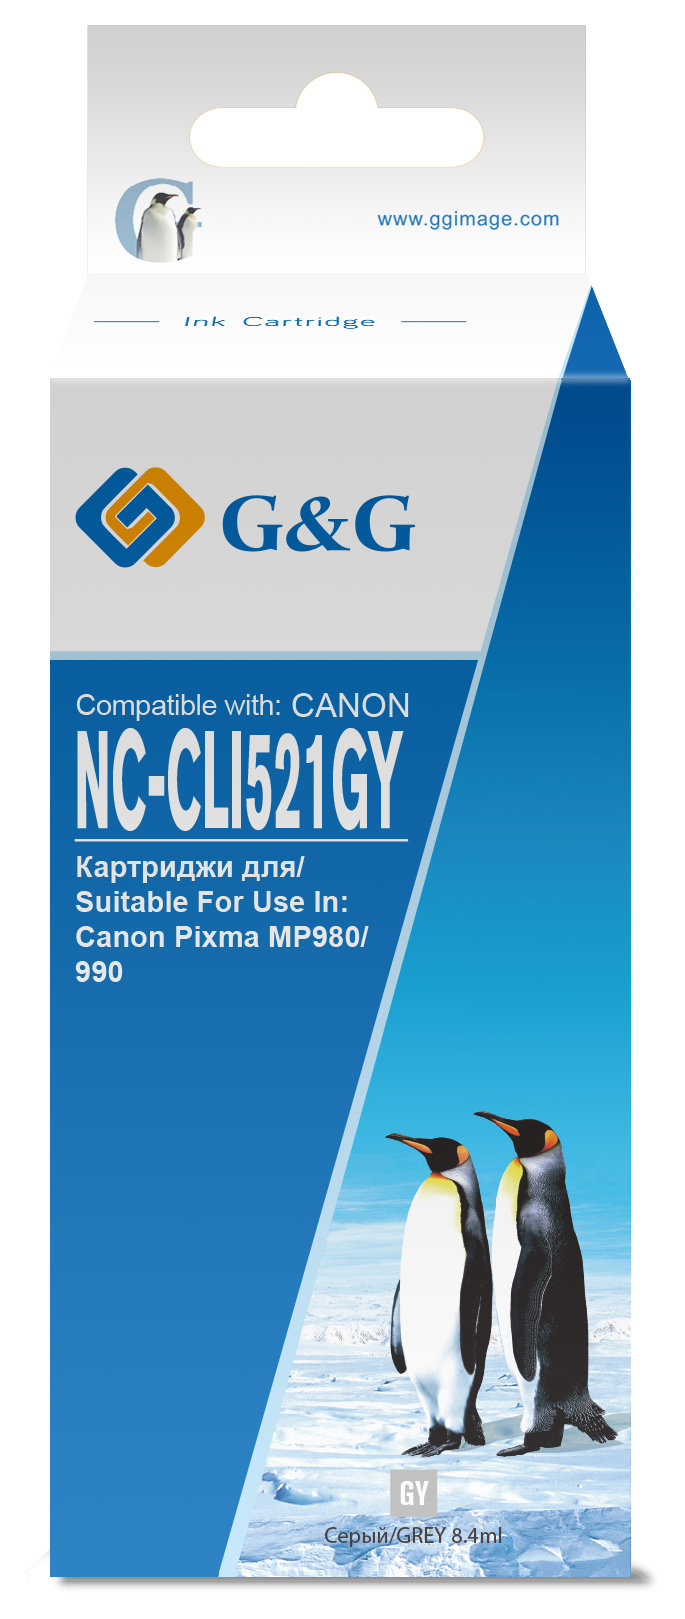 nc-cli521gy_1